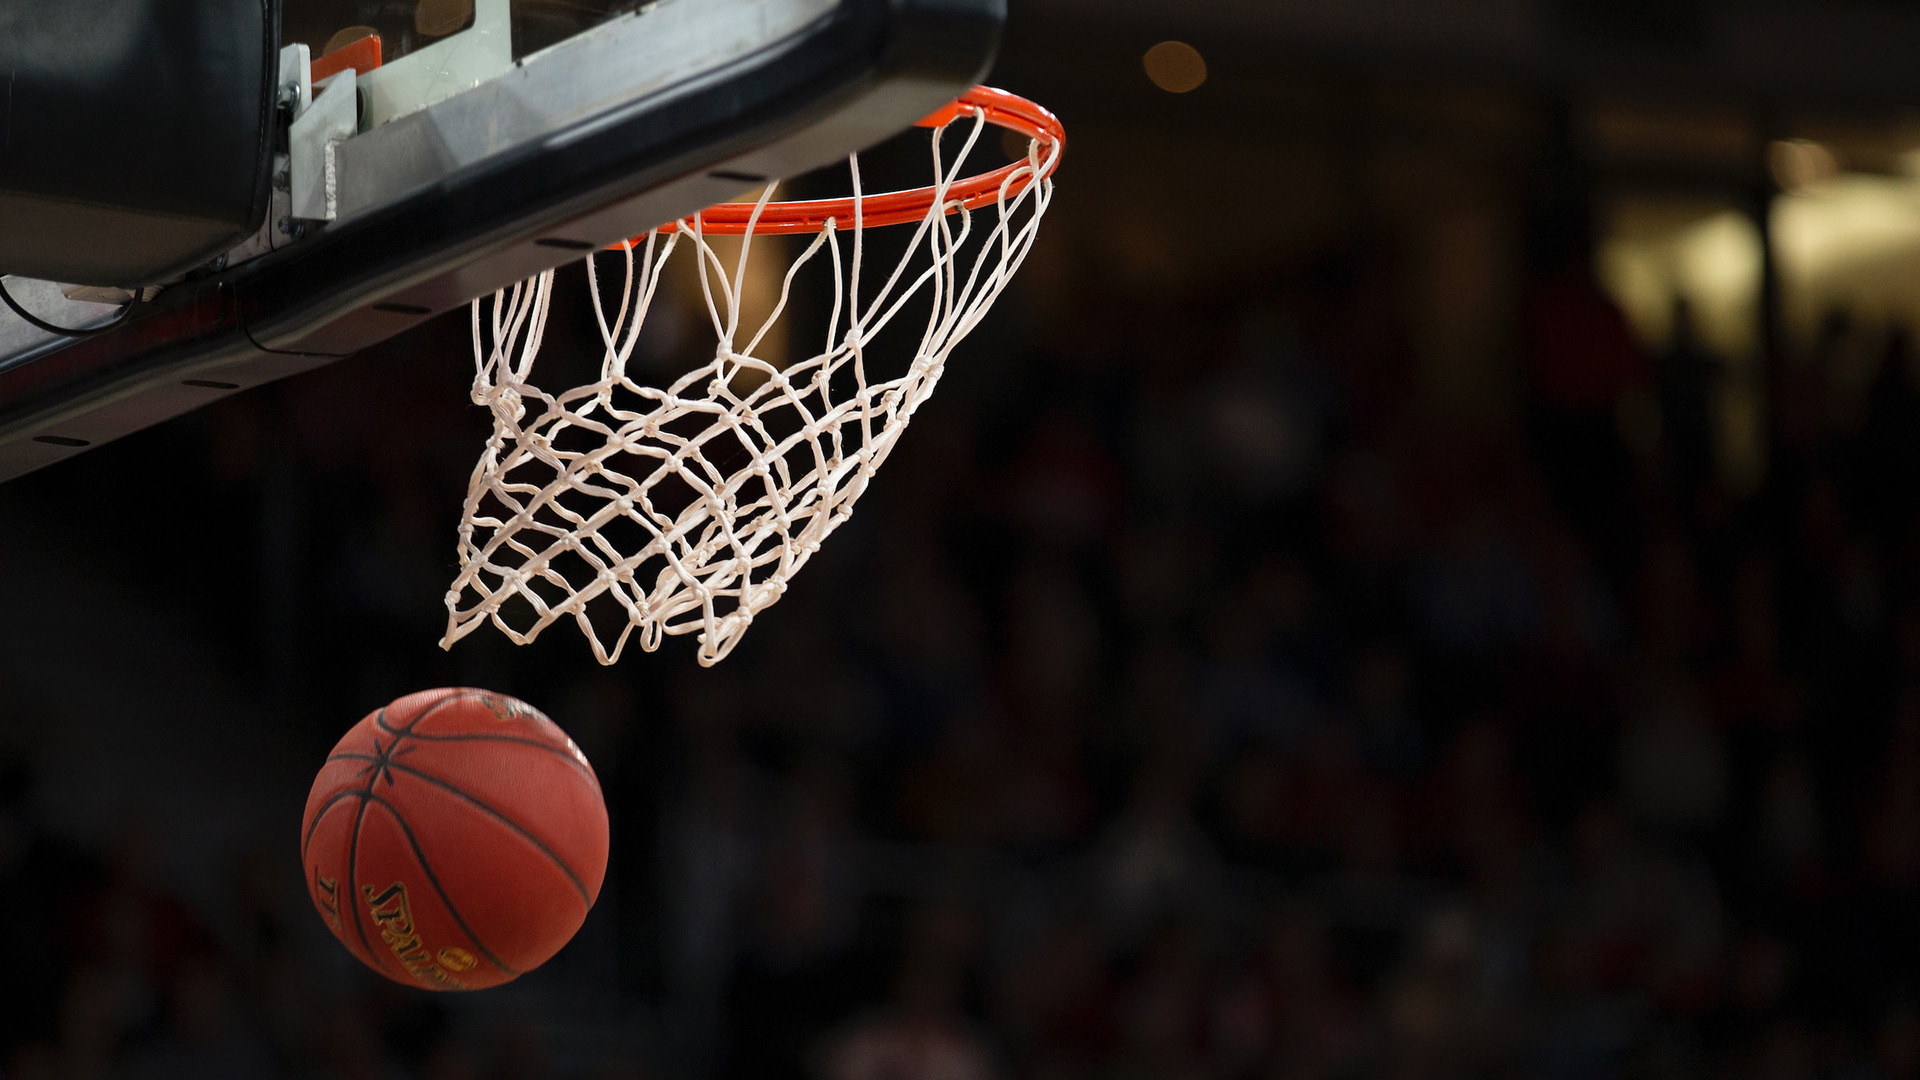 A basketball dropping through a hoop